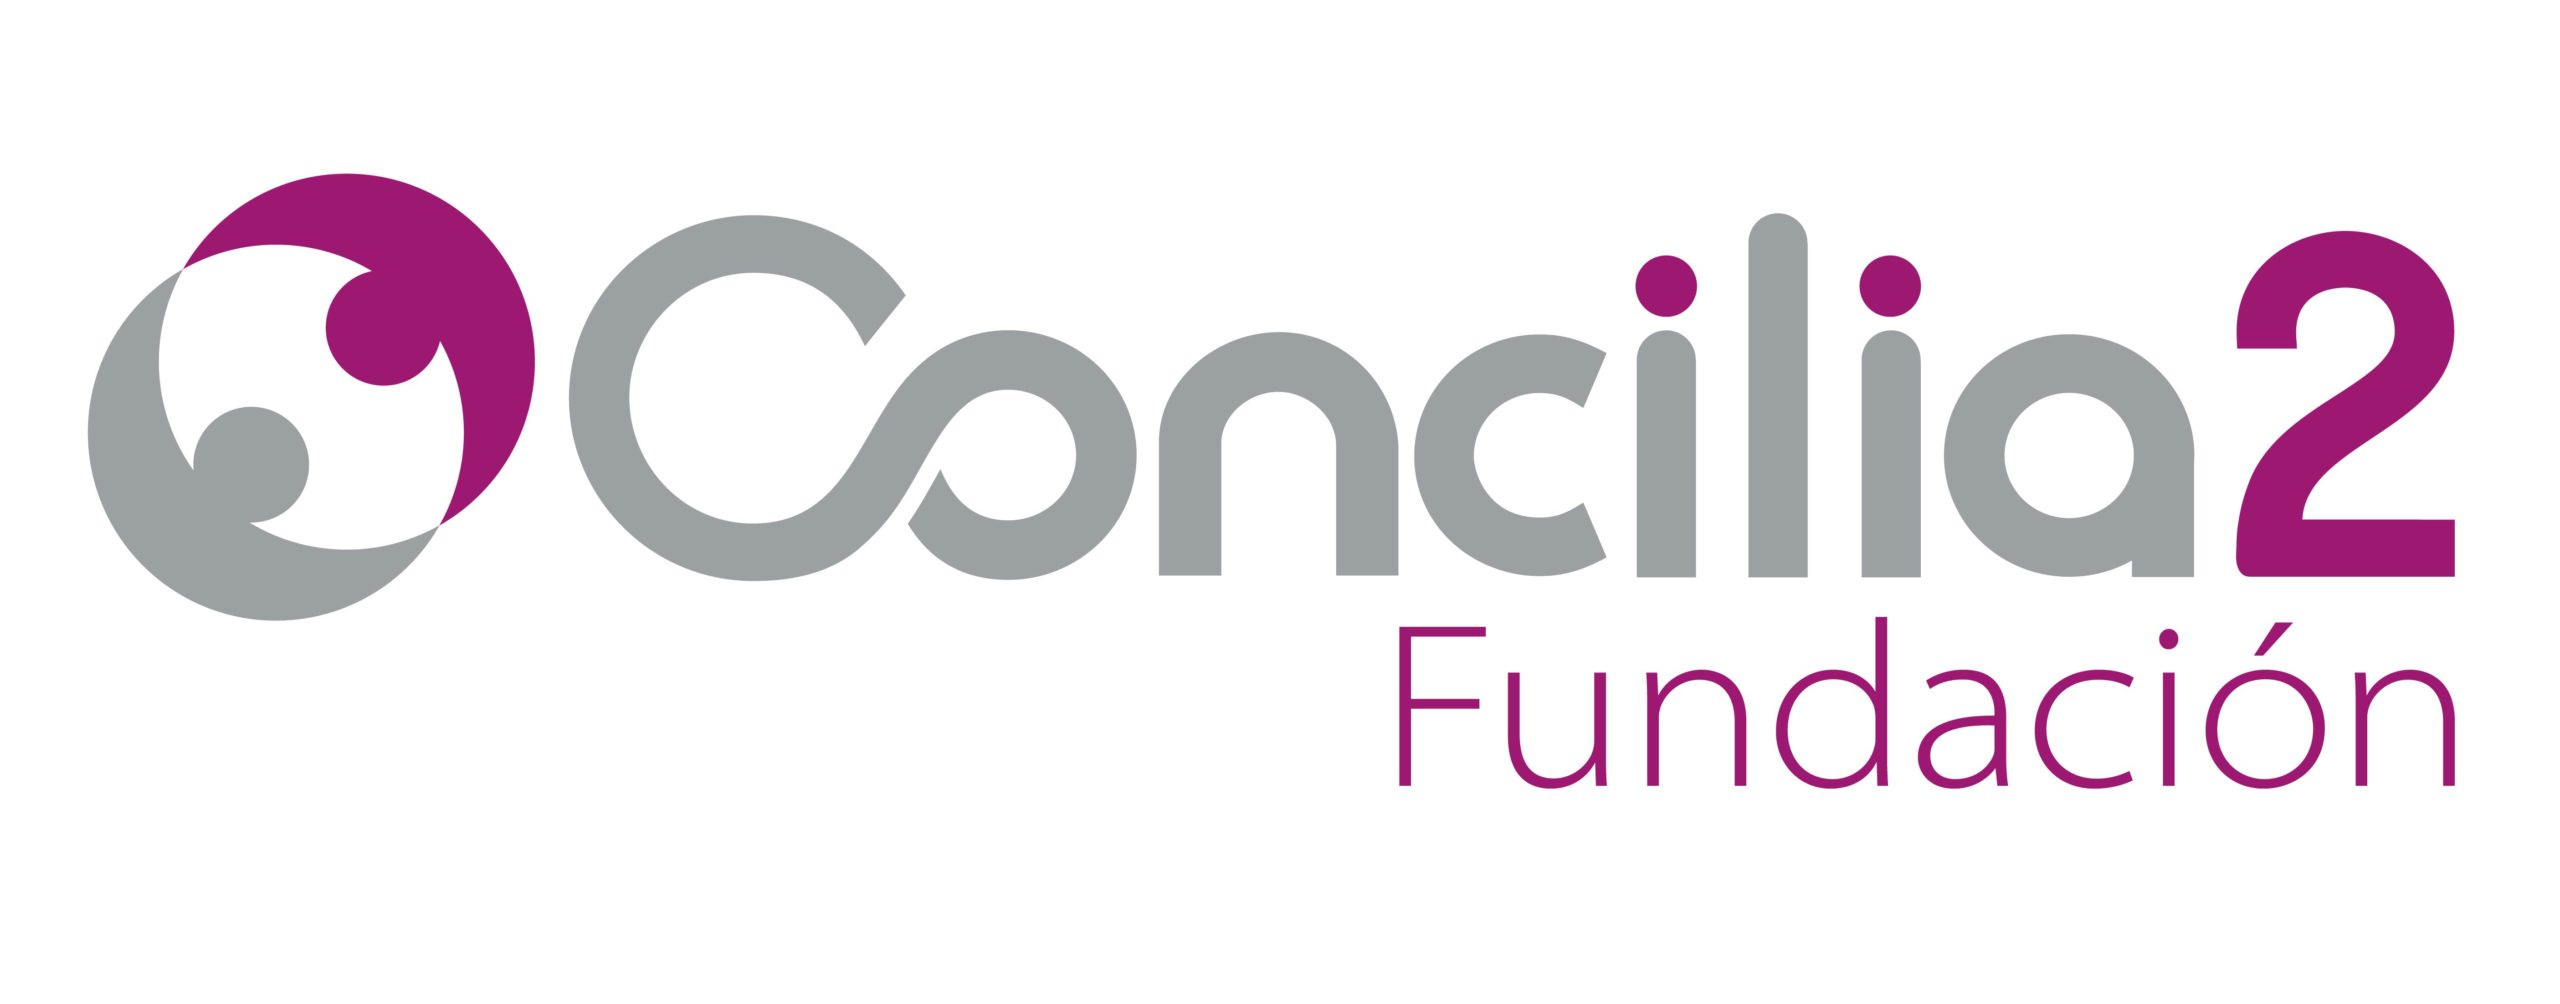 (c) Fundacionconcilia2.org